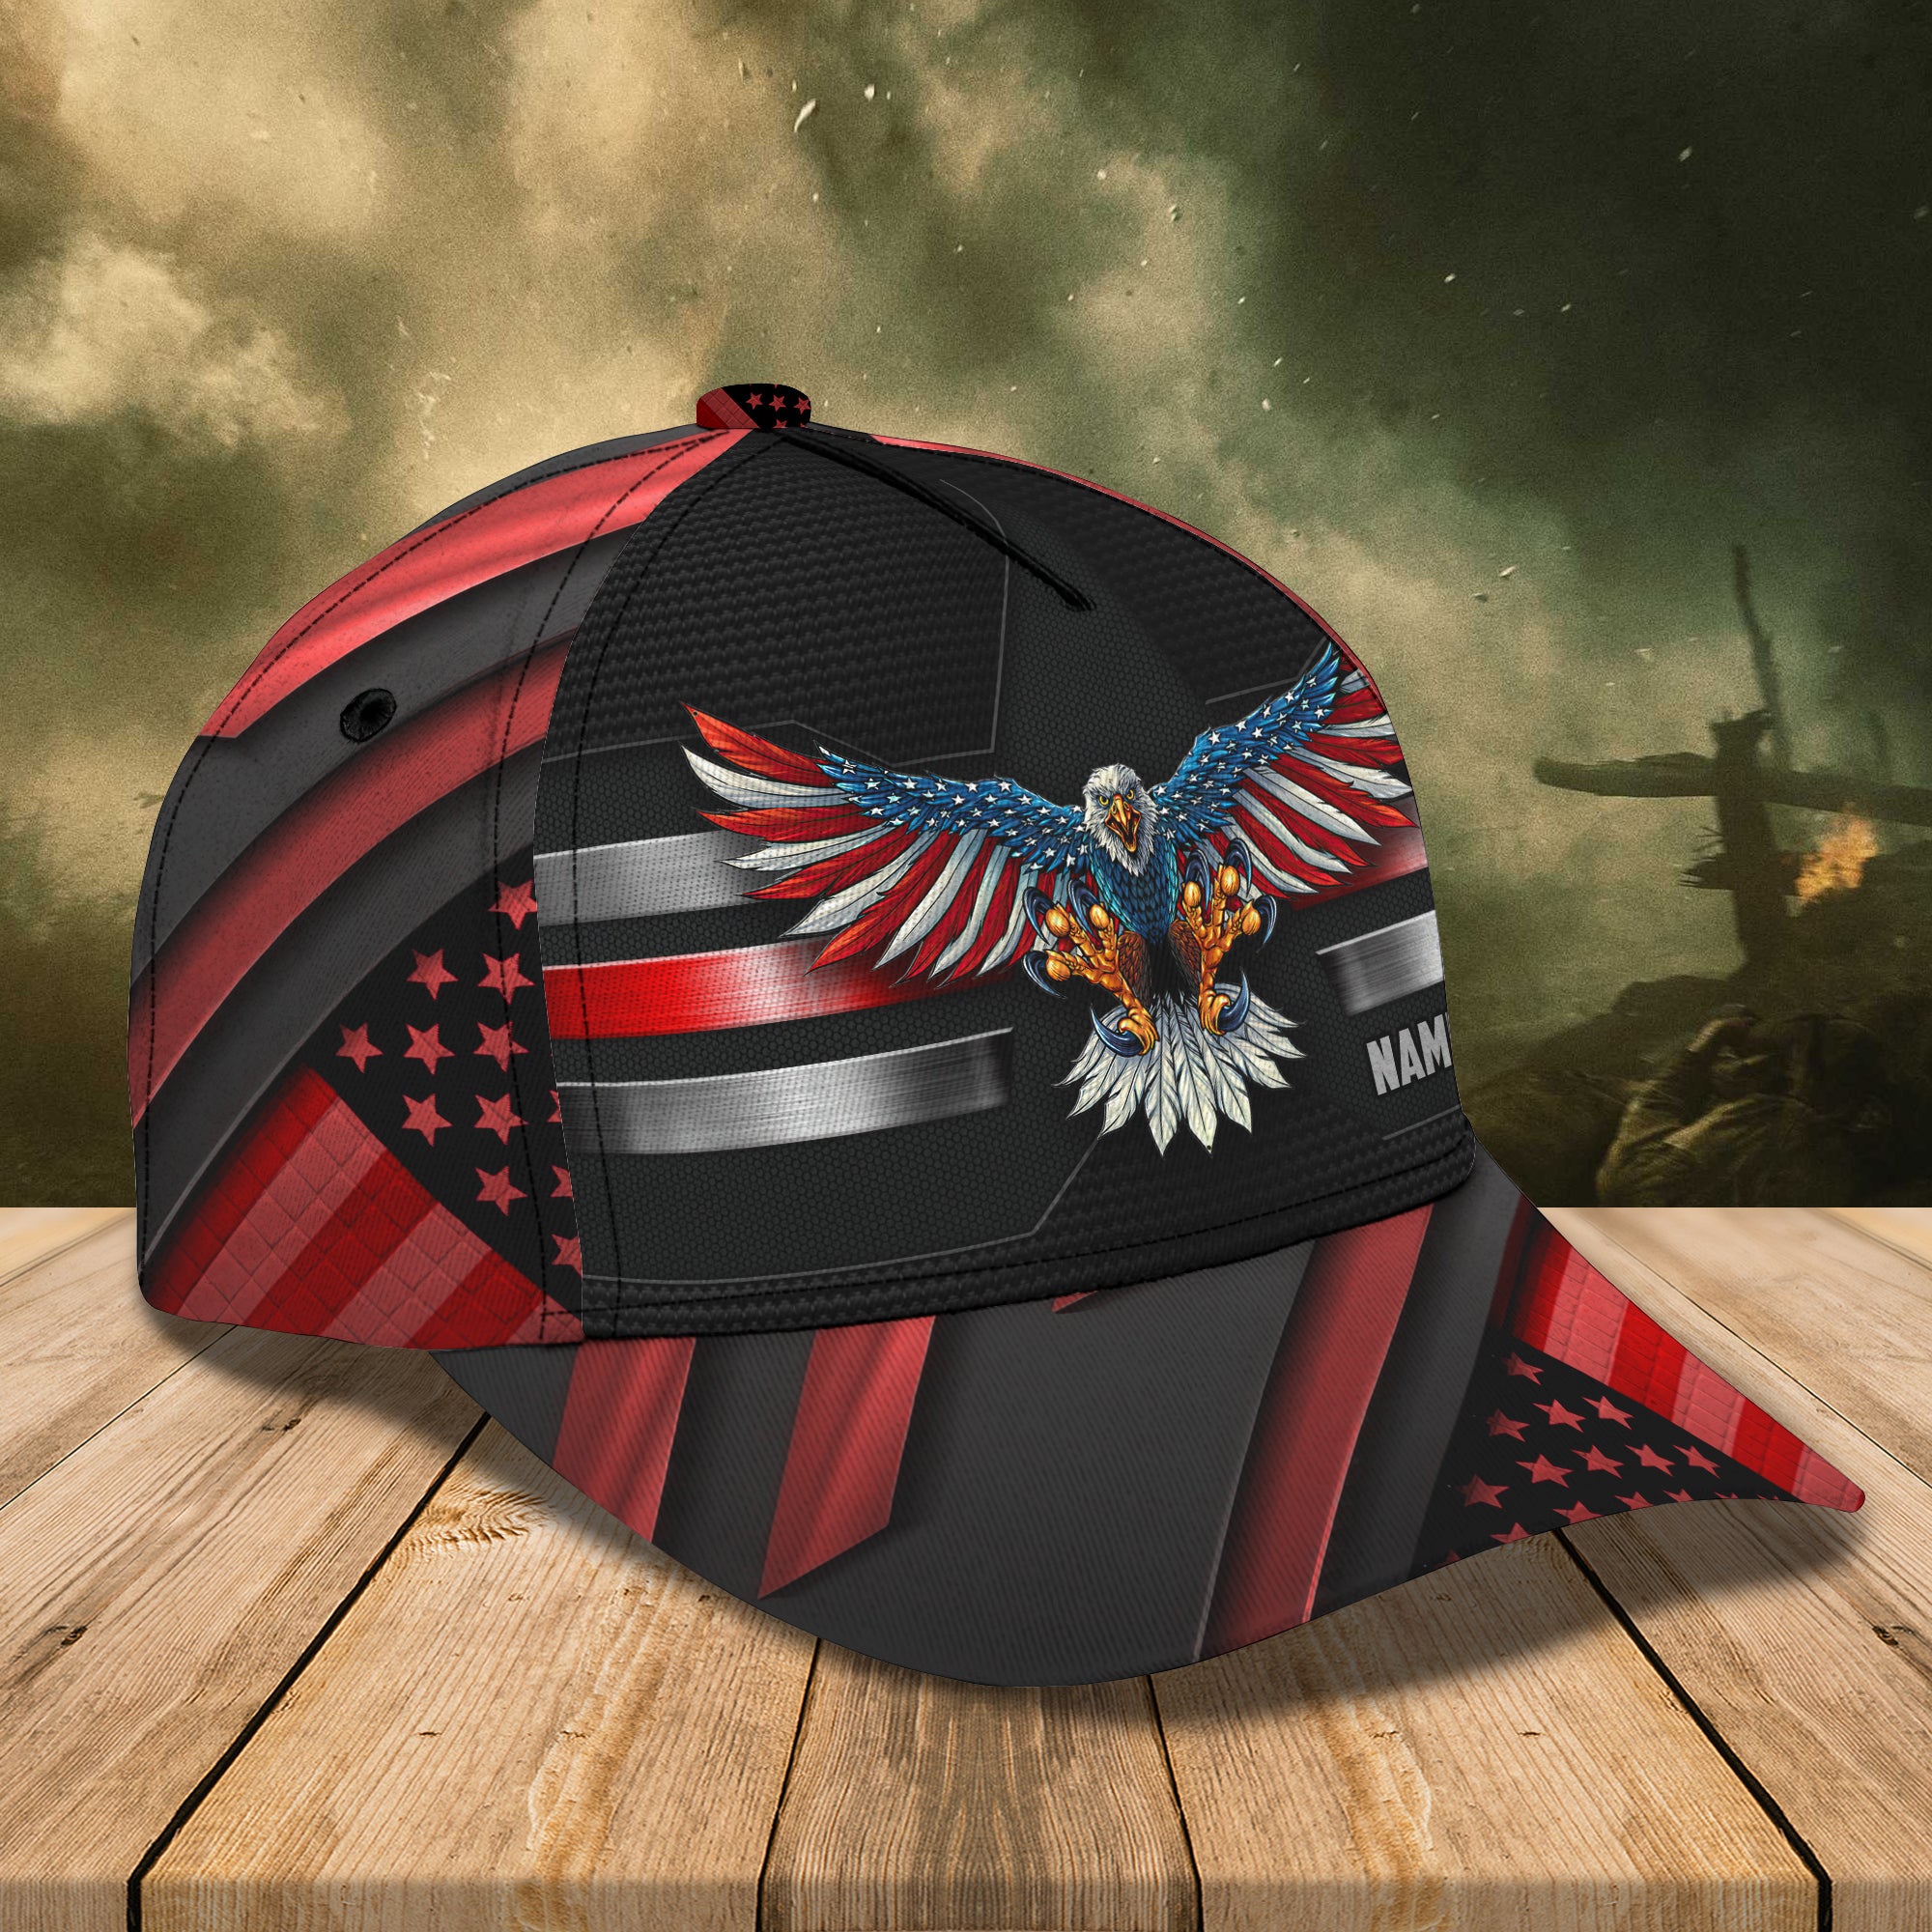 America Eagle - Personalized Name Cap - Urt96